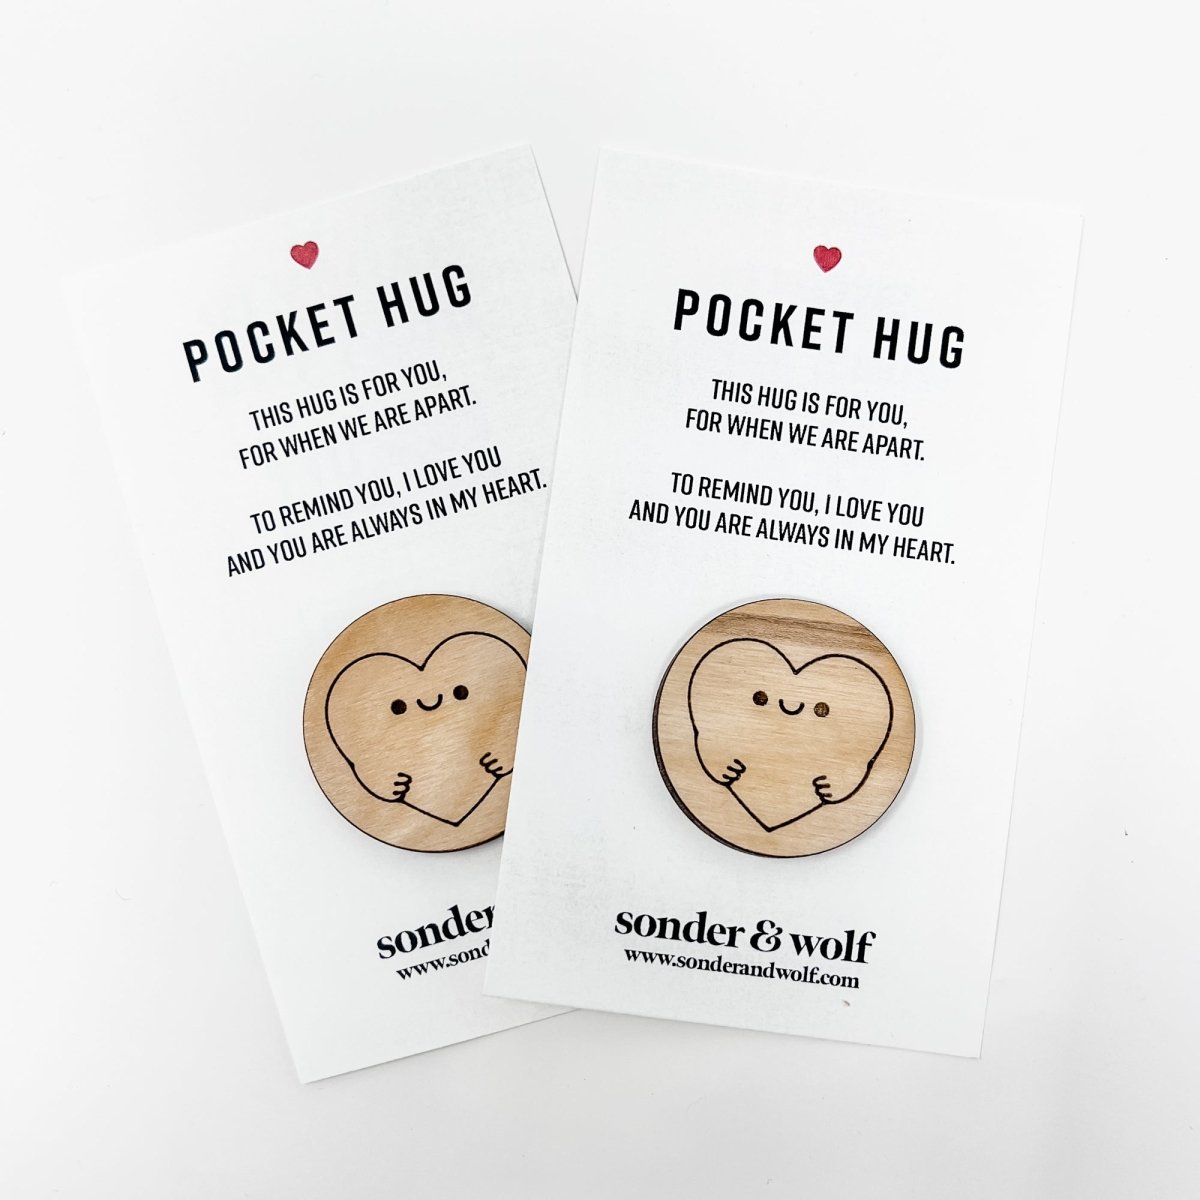 Pocket Hug - sonder and wolf